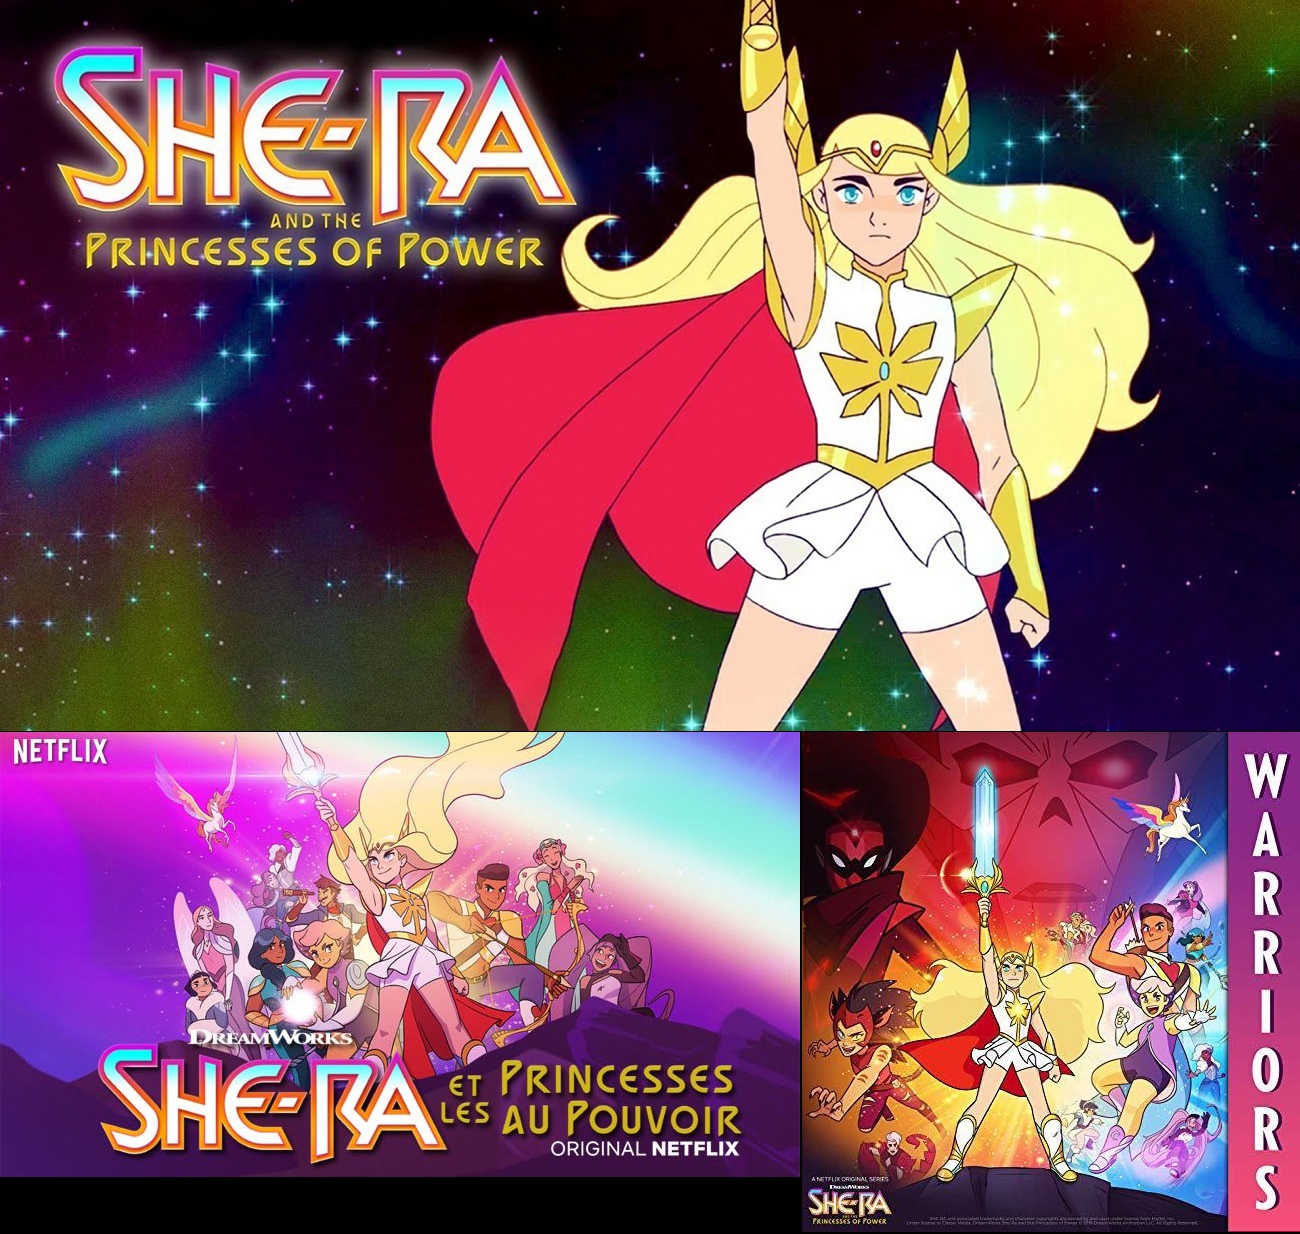 She-Ra et les Princesses au pouvoir (She-Ra and the Princesses of Power)